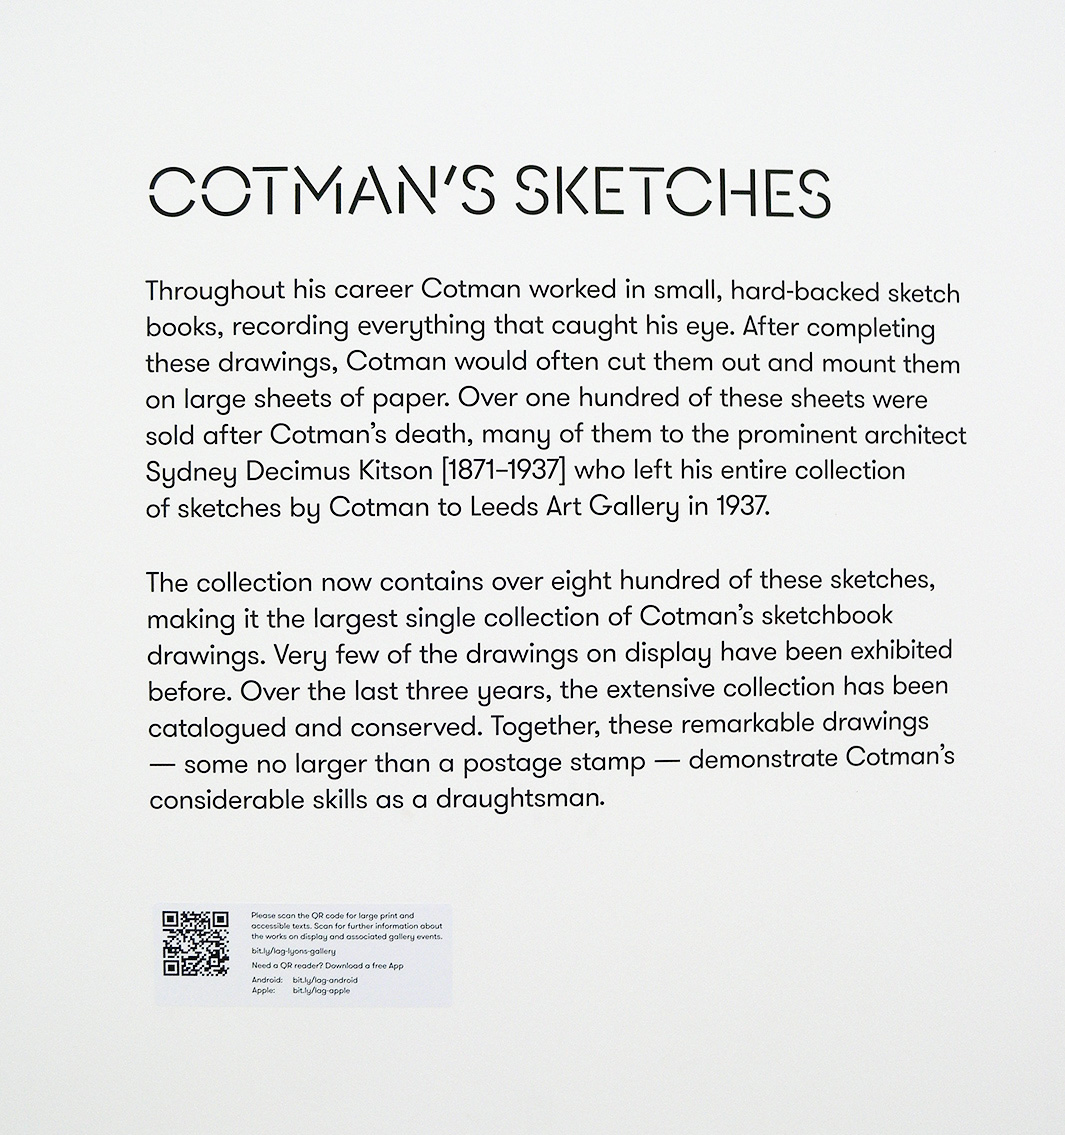 Cotman sketches text board